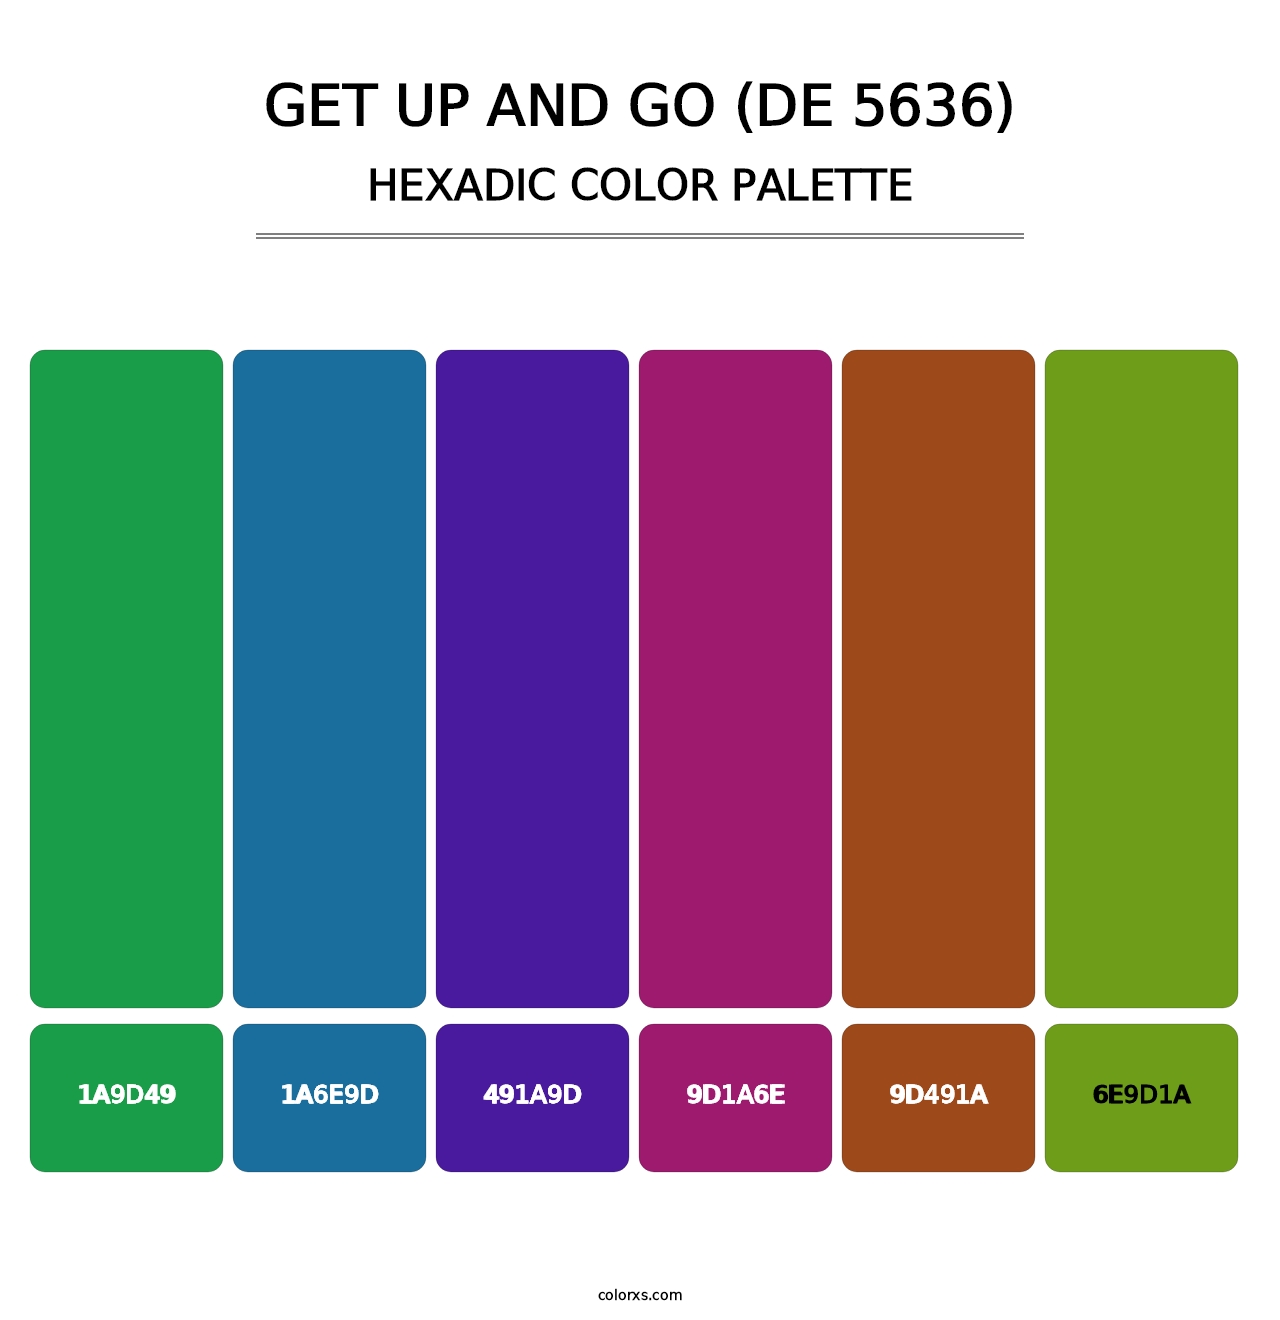 Get Up and Go (DE 5636) - Hexadic Color Palette